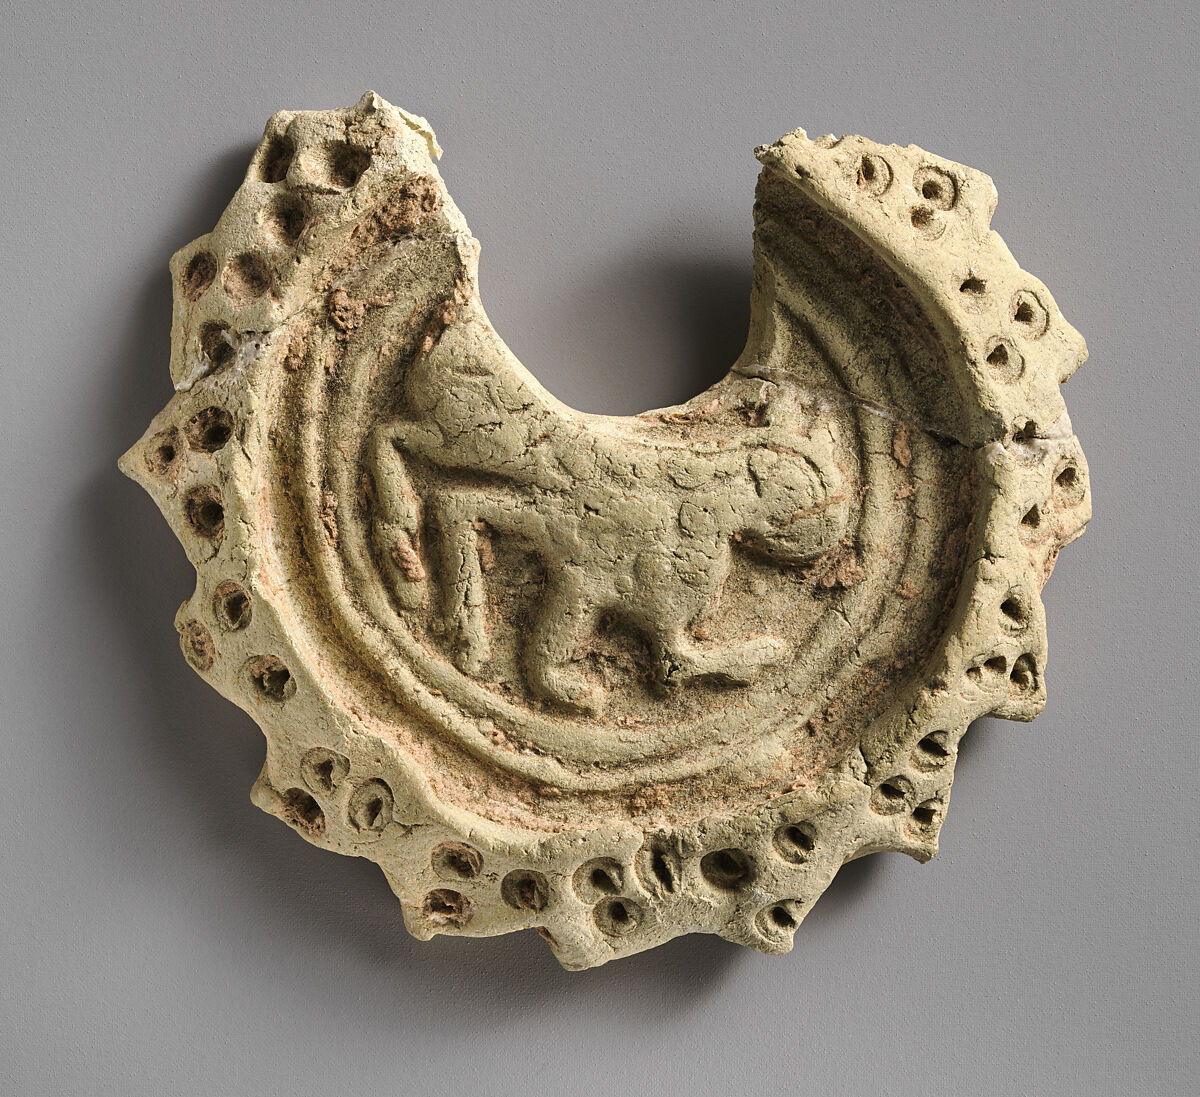 Vessel lid, Ceramic, Sasanian or Islamic 